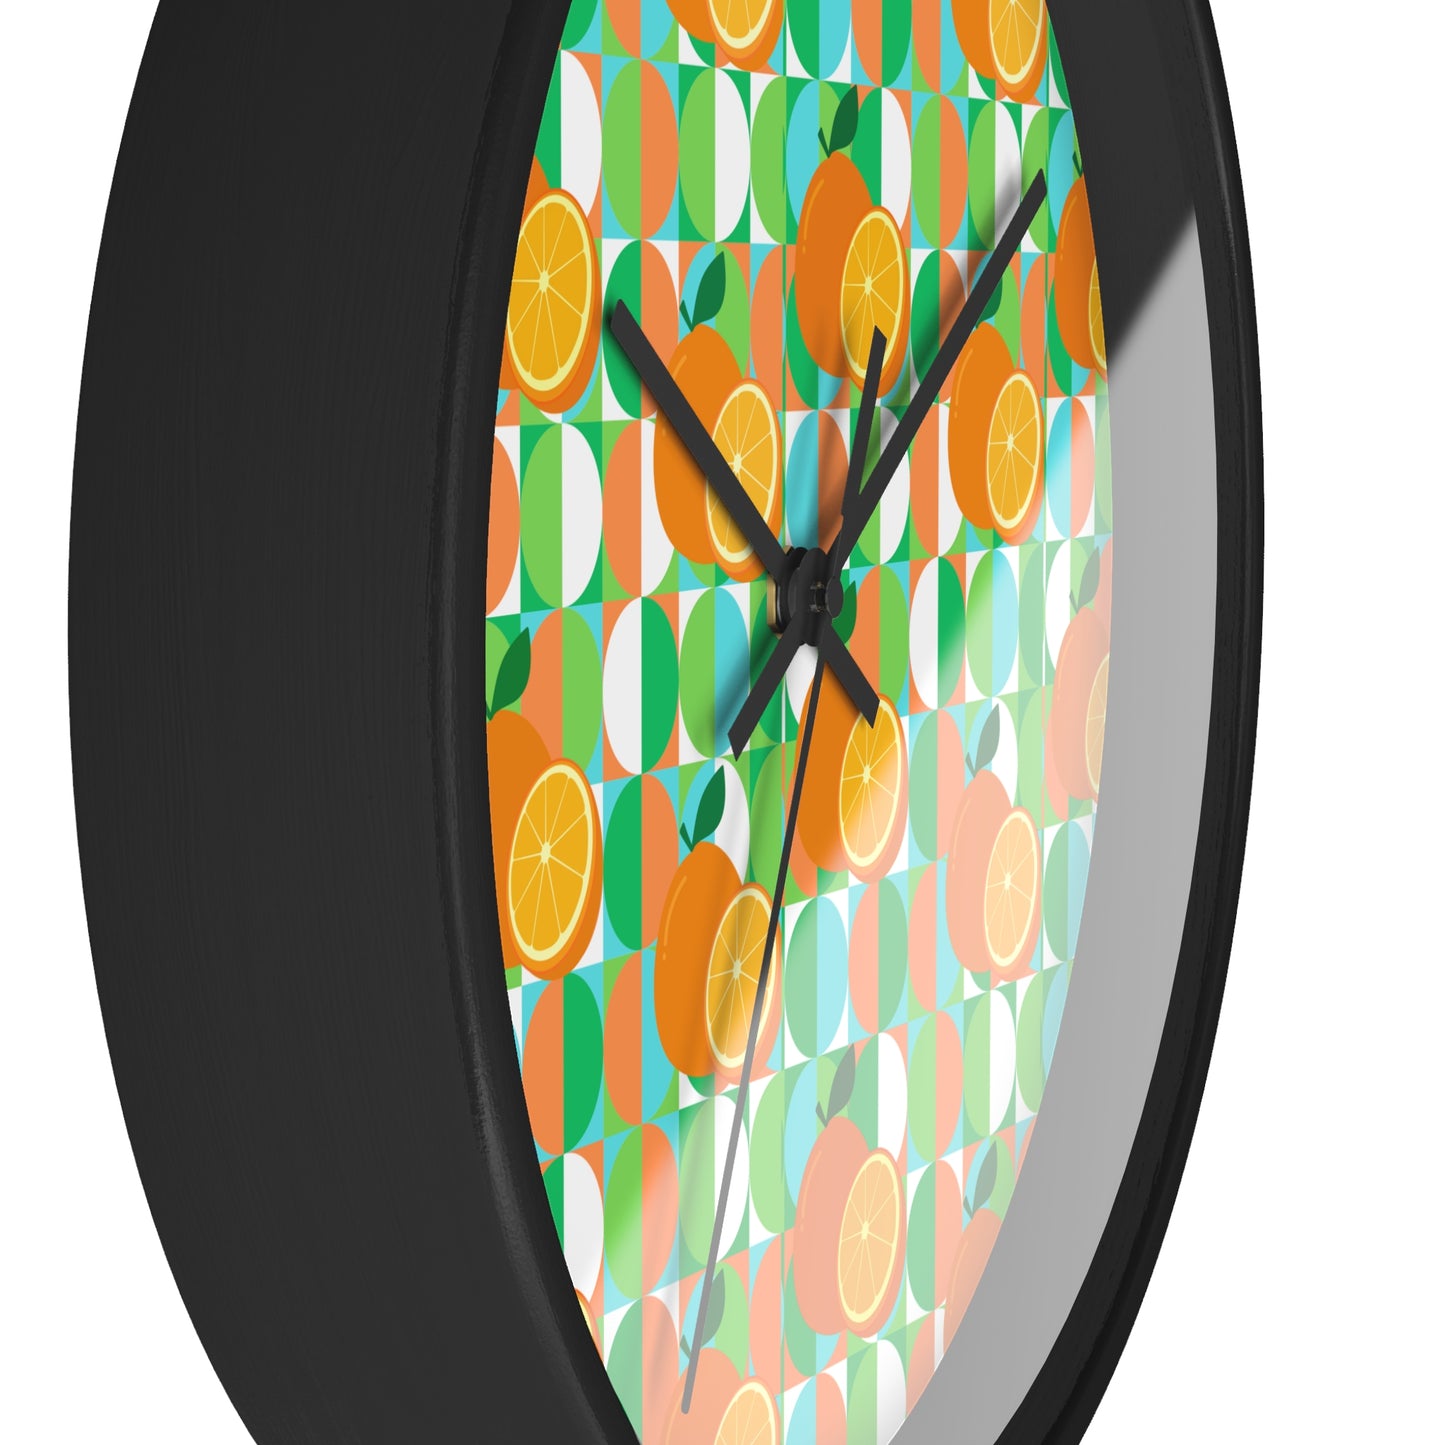 Retro Citrus Midcentury Modern Oranges Pattern Wall Clock